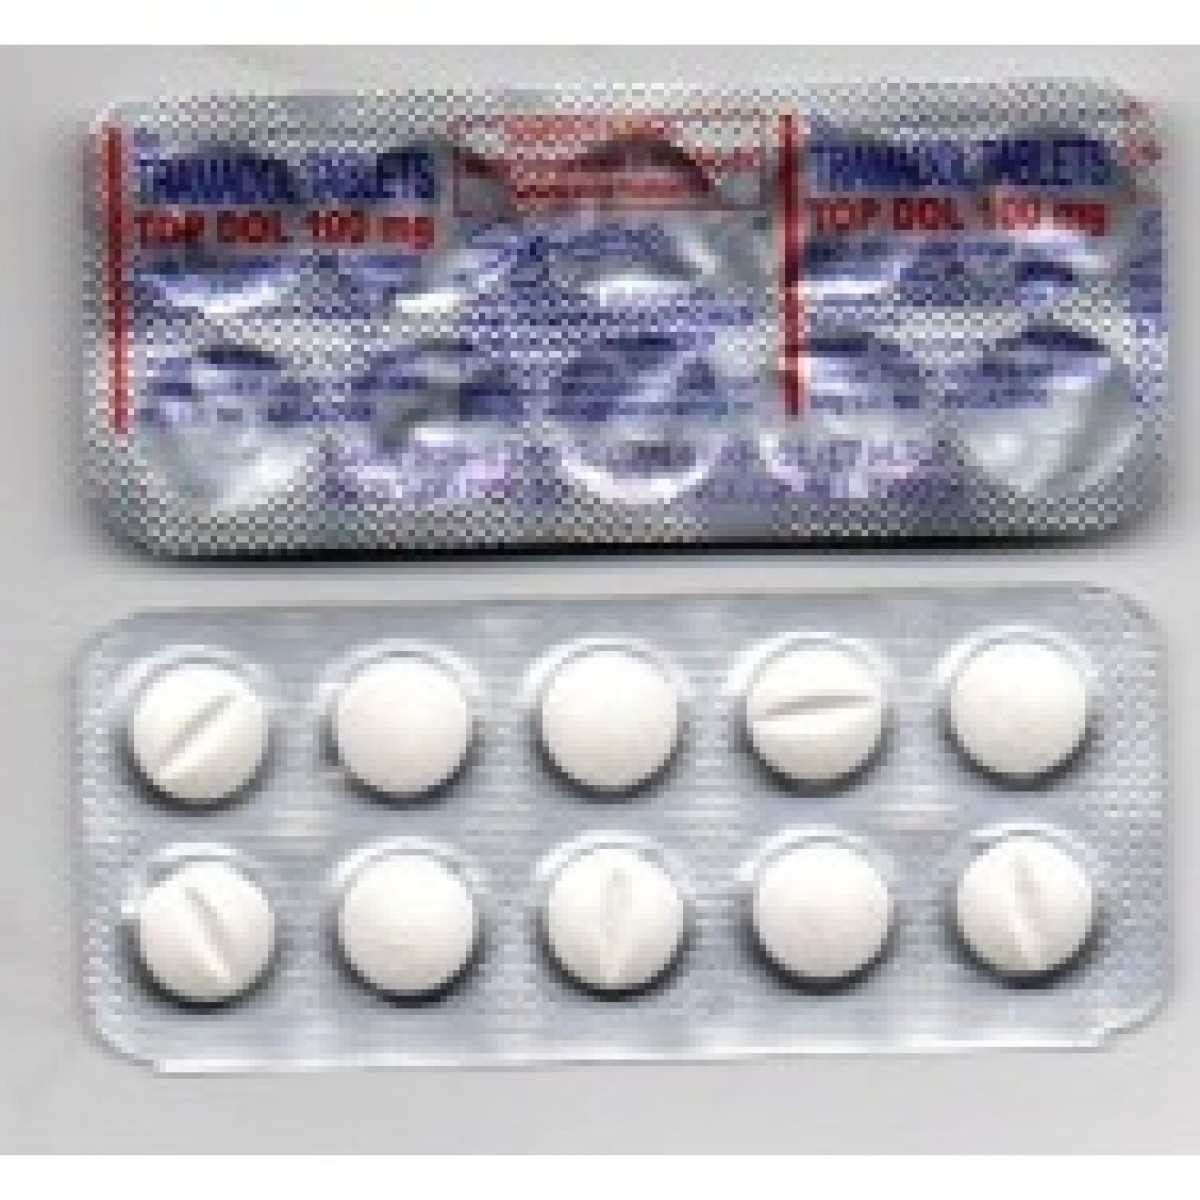 tramadol hcl 100 mg treatment